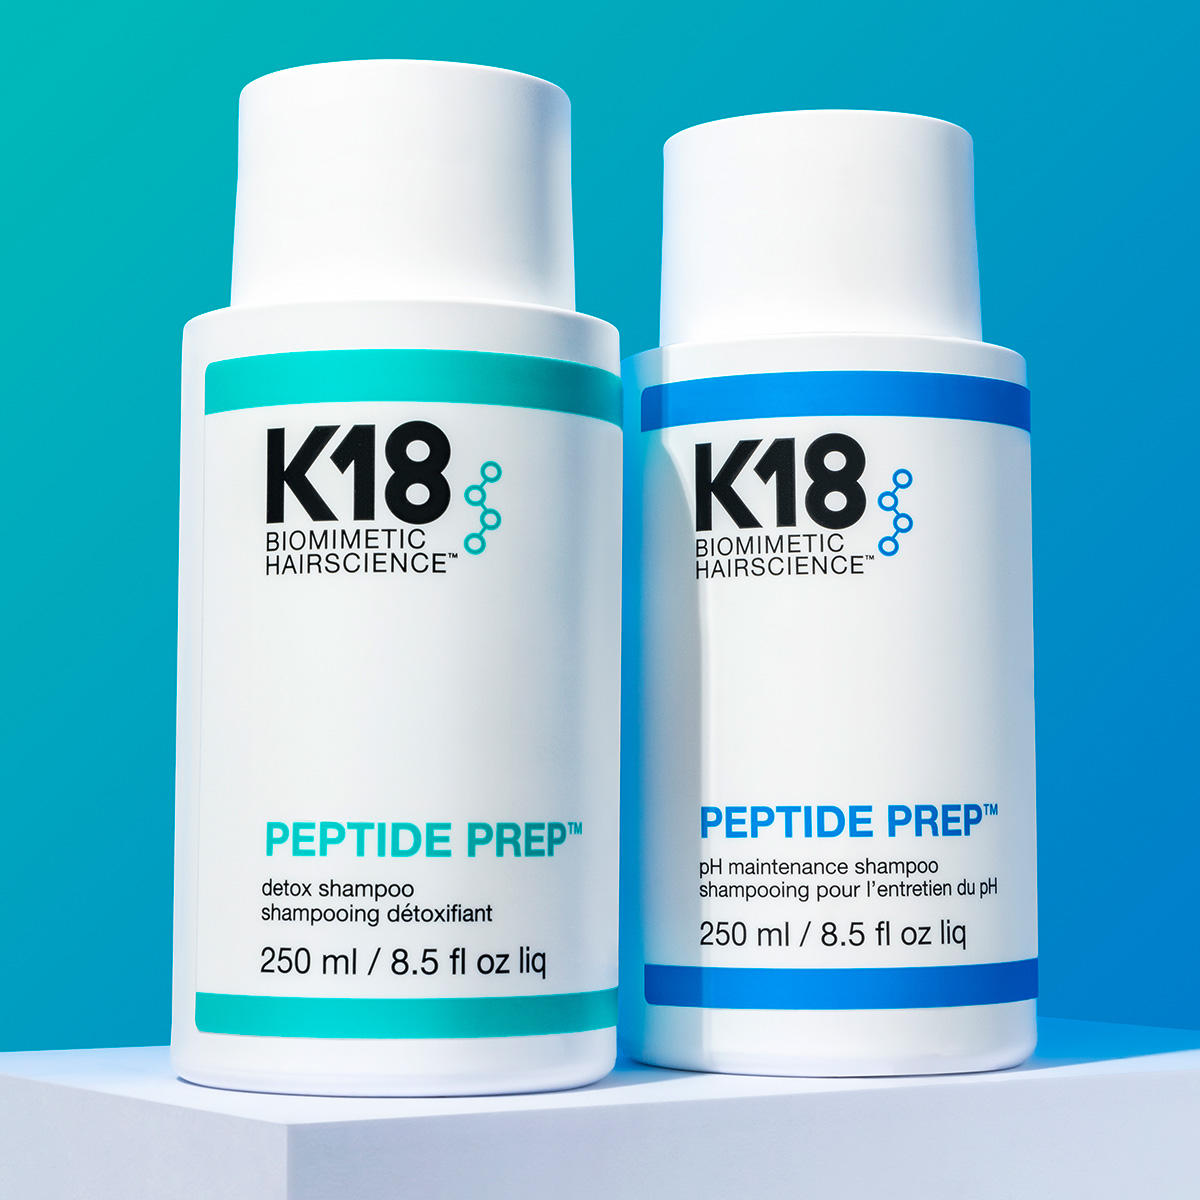 K18 Biomimetic Hairscience PEPTIDE PREP pH Maintenance Shampoo 250 ml - 4